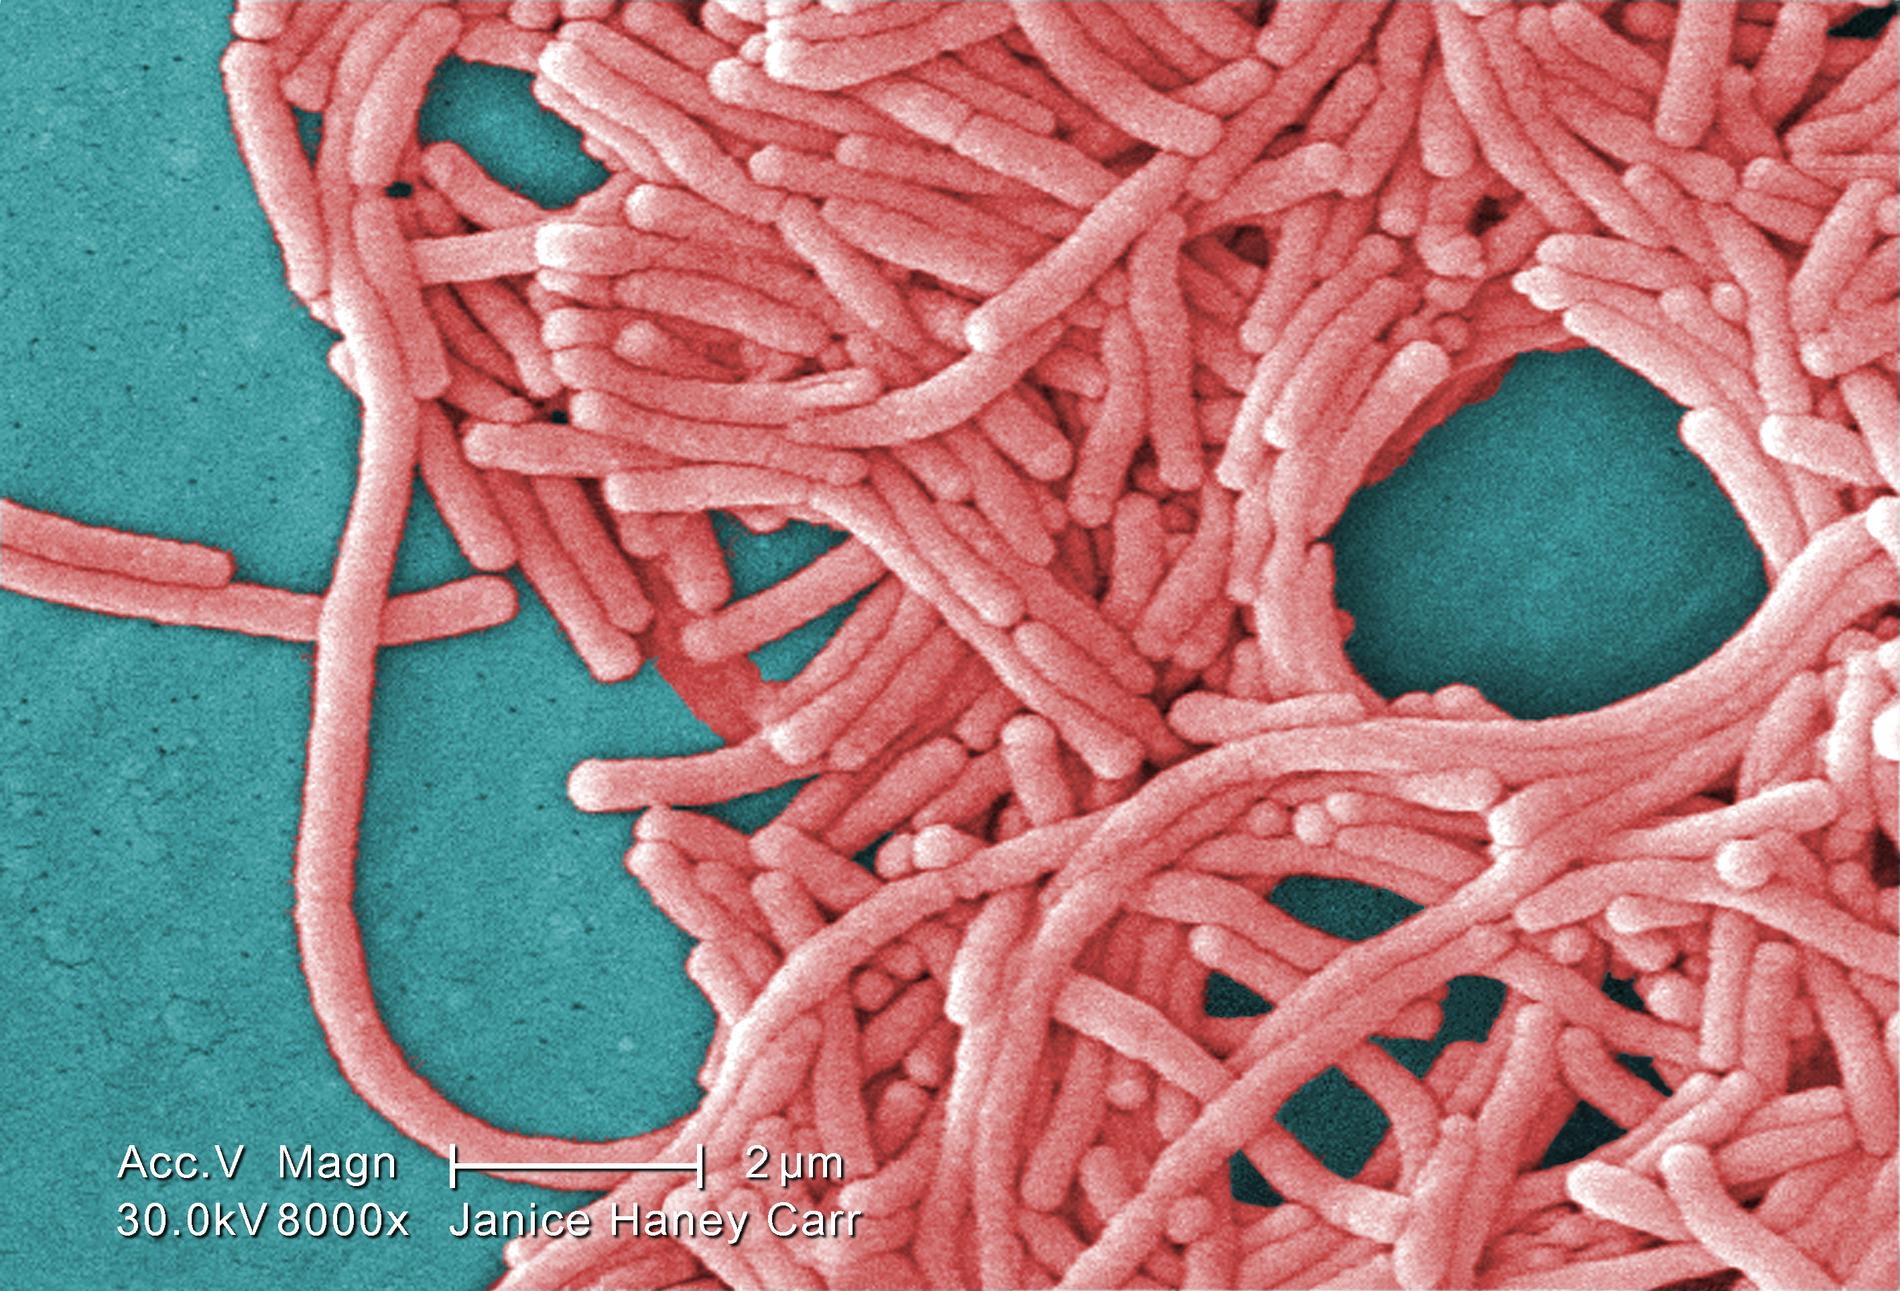  Legionella pneumophila bakterier.